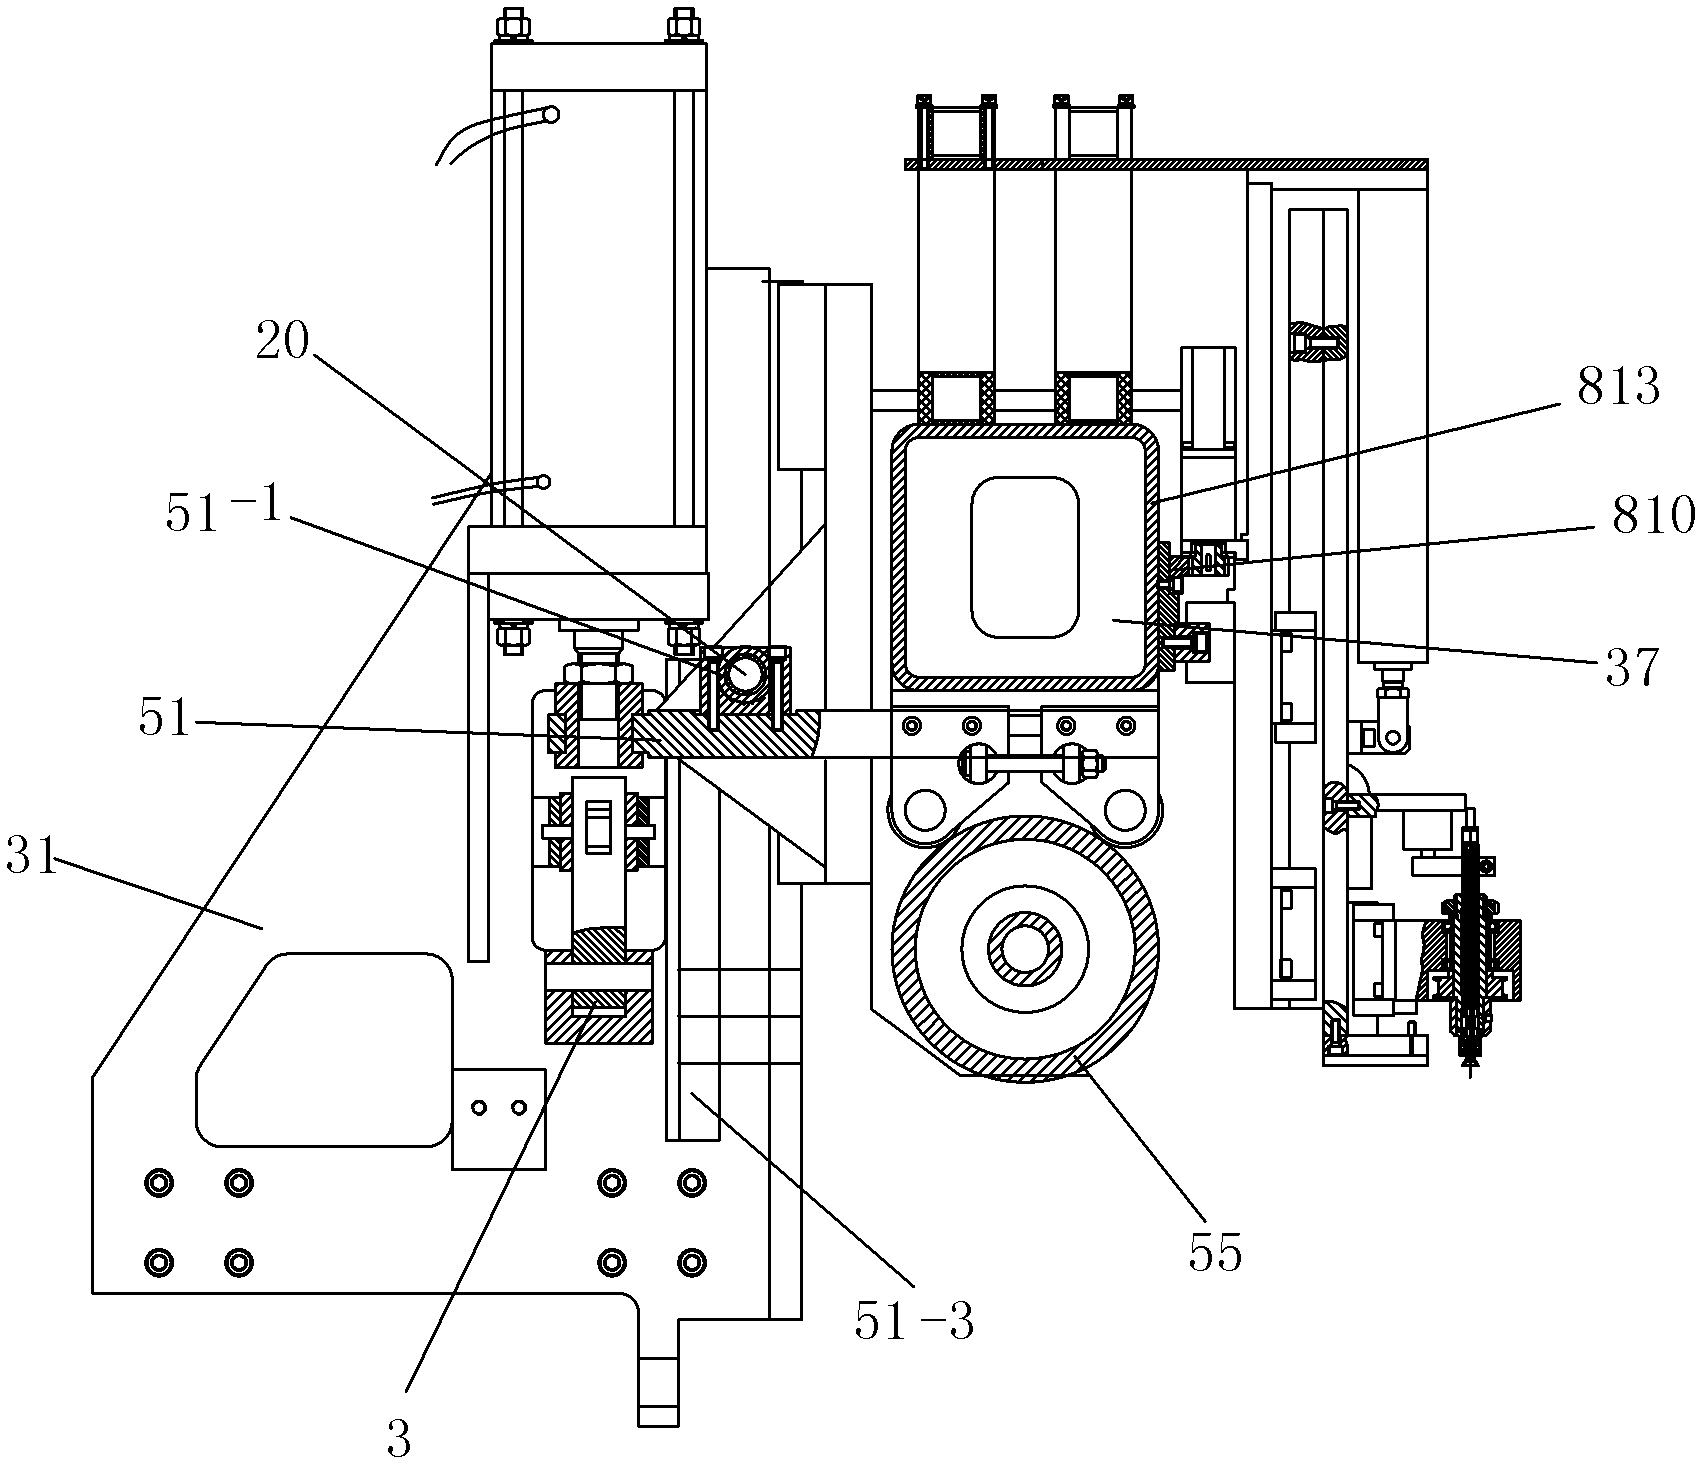 Press table mechanism for sleeve winding machine